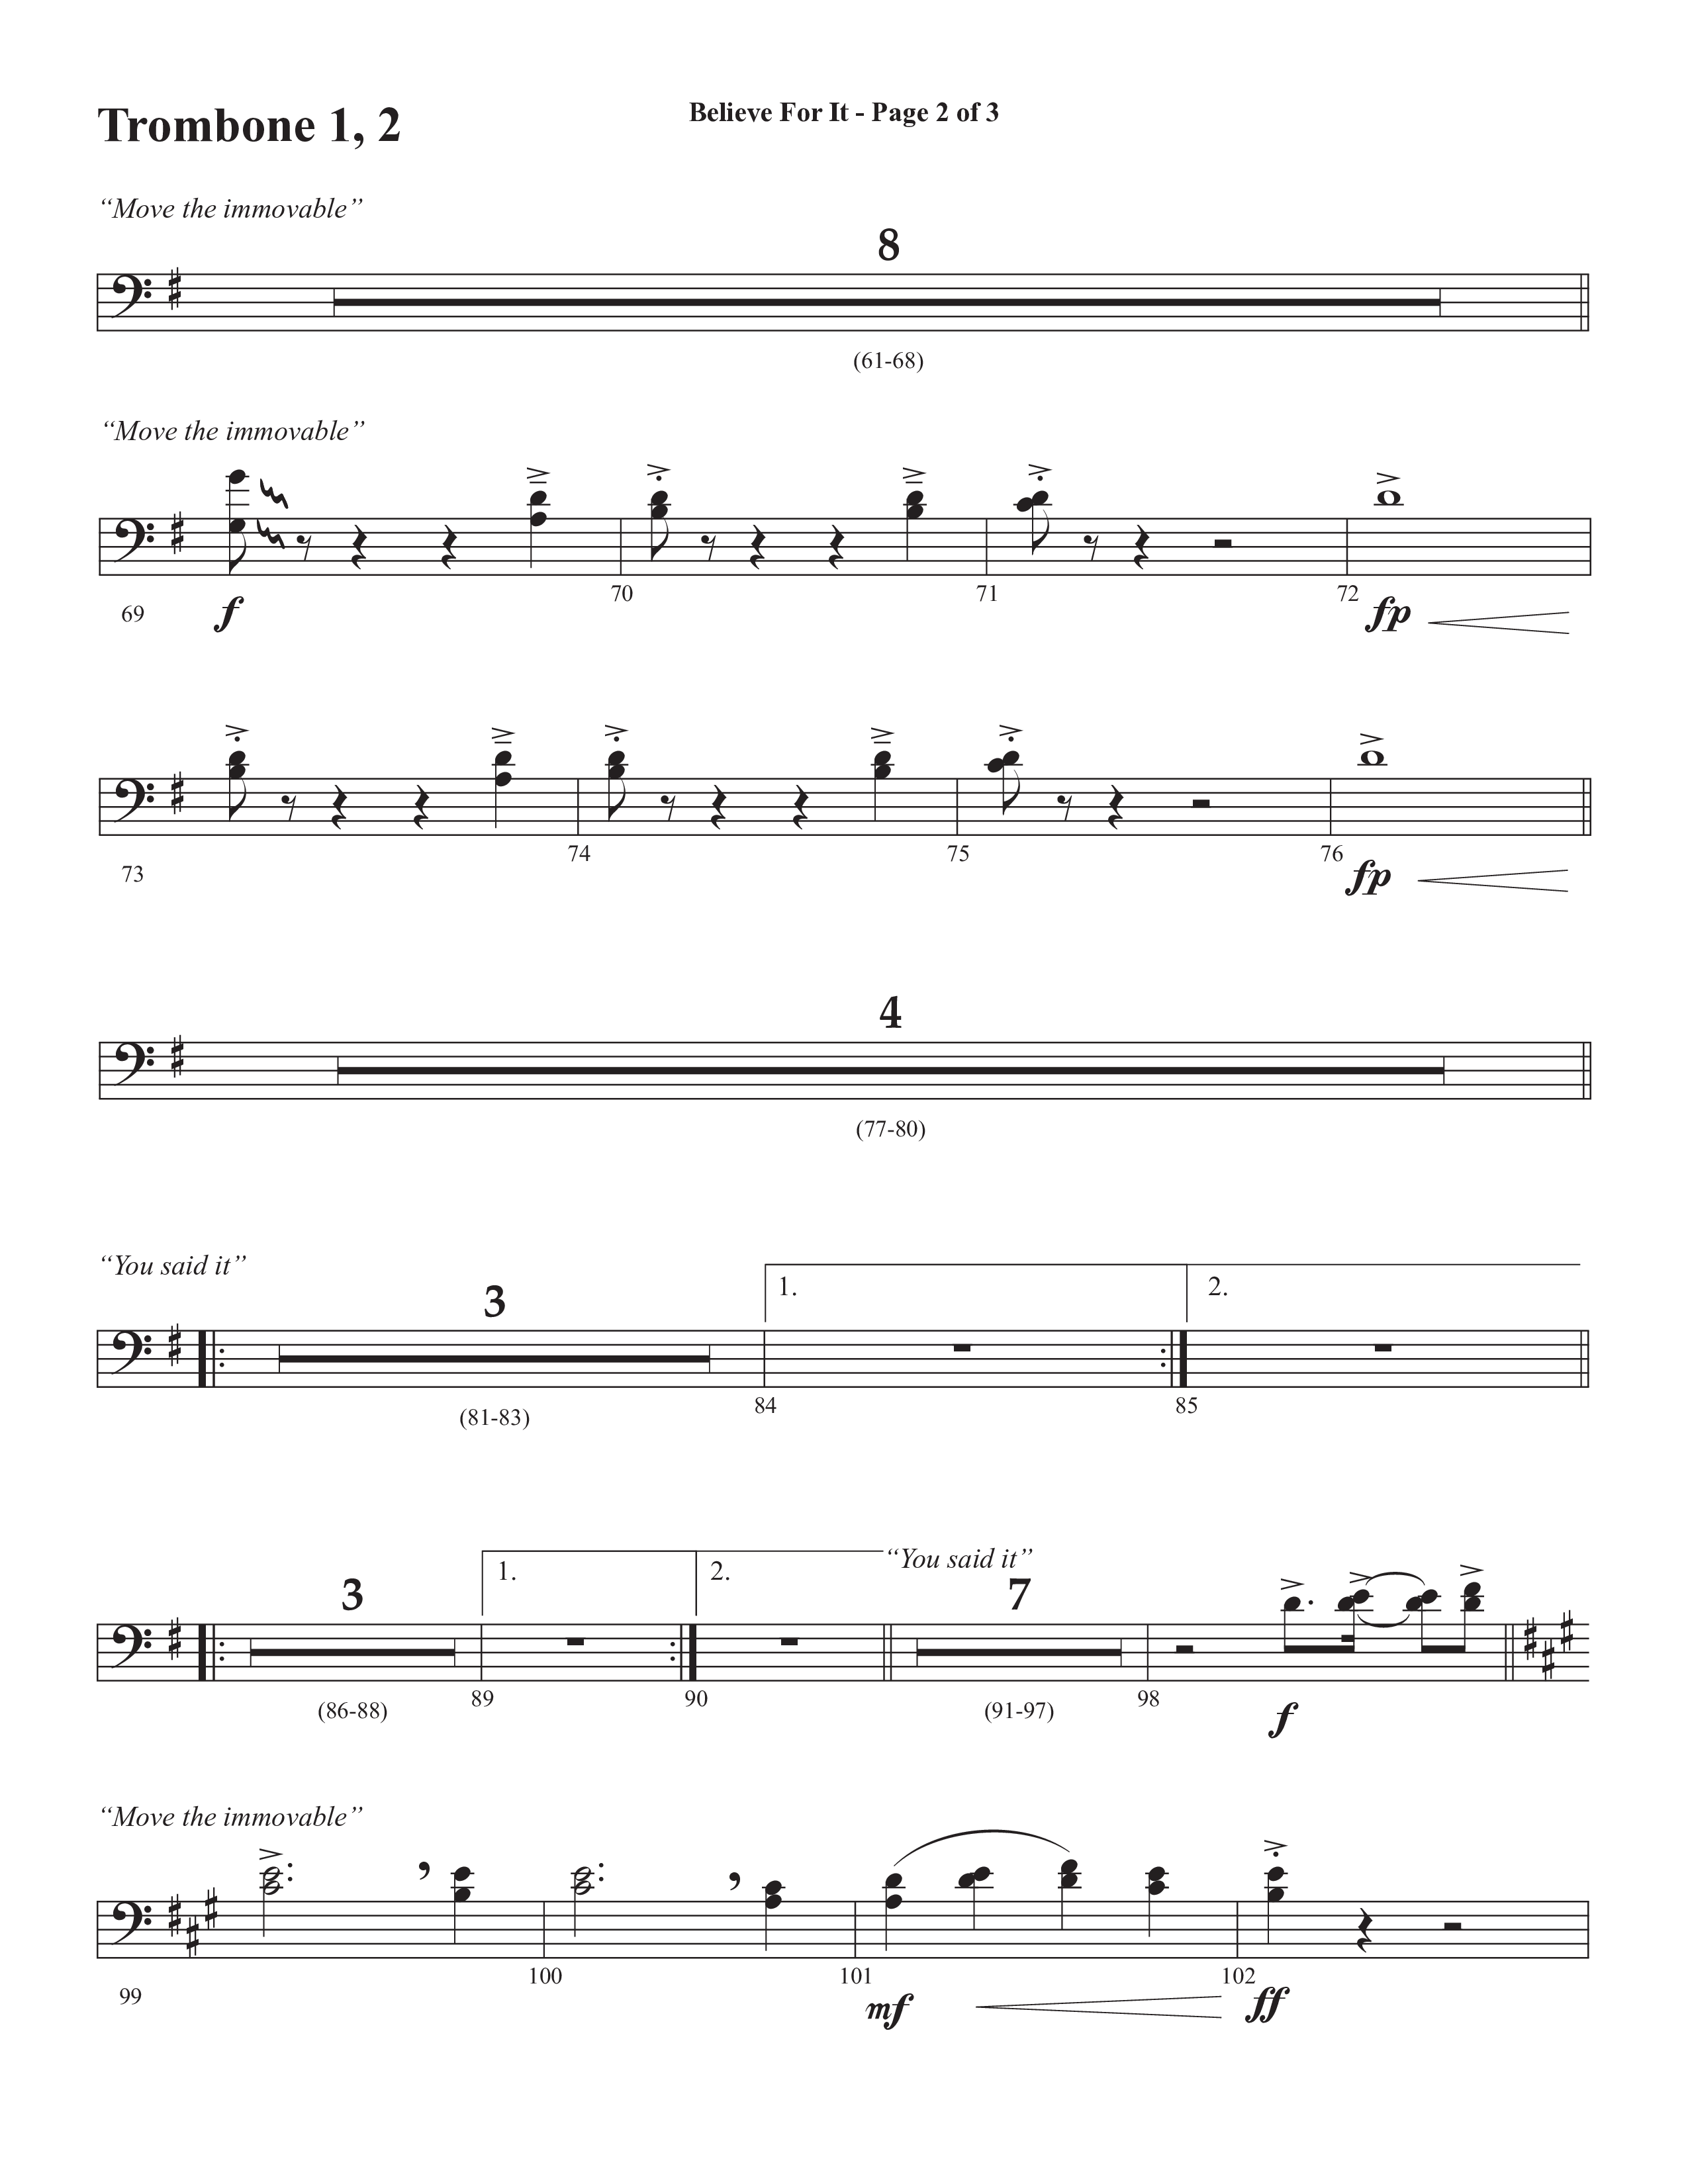 Believe For It (Choral Anthem SATB) Trombone 1/2 (Semsen Music / Arr. Phil Nitz)